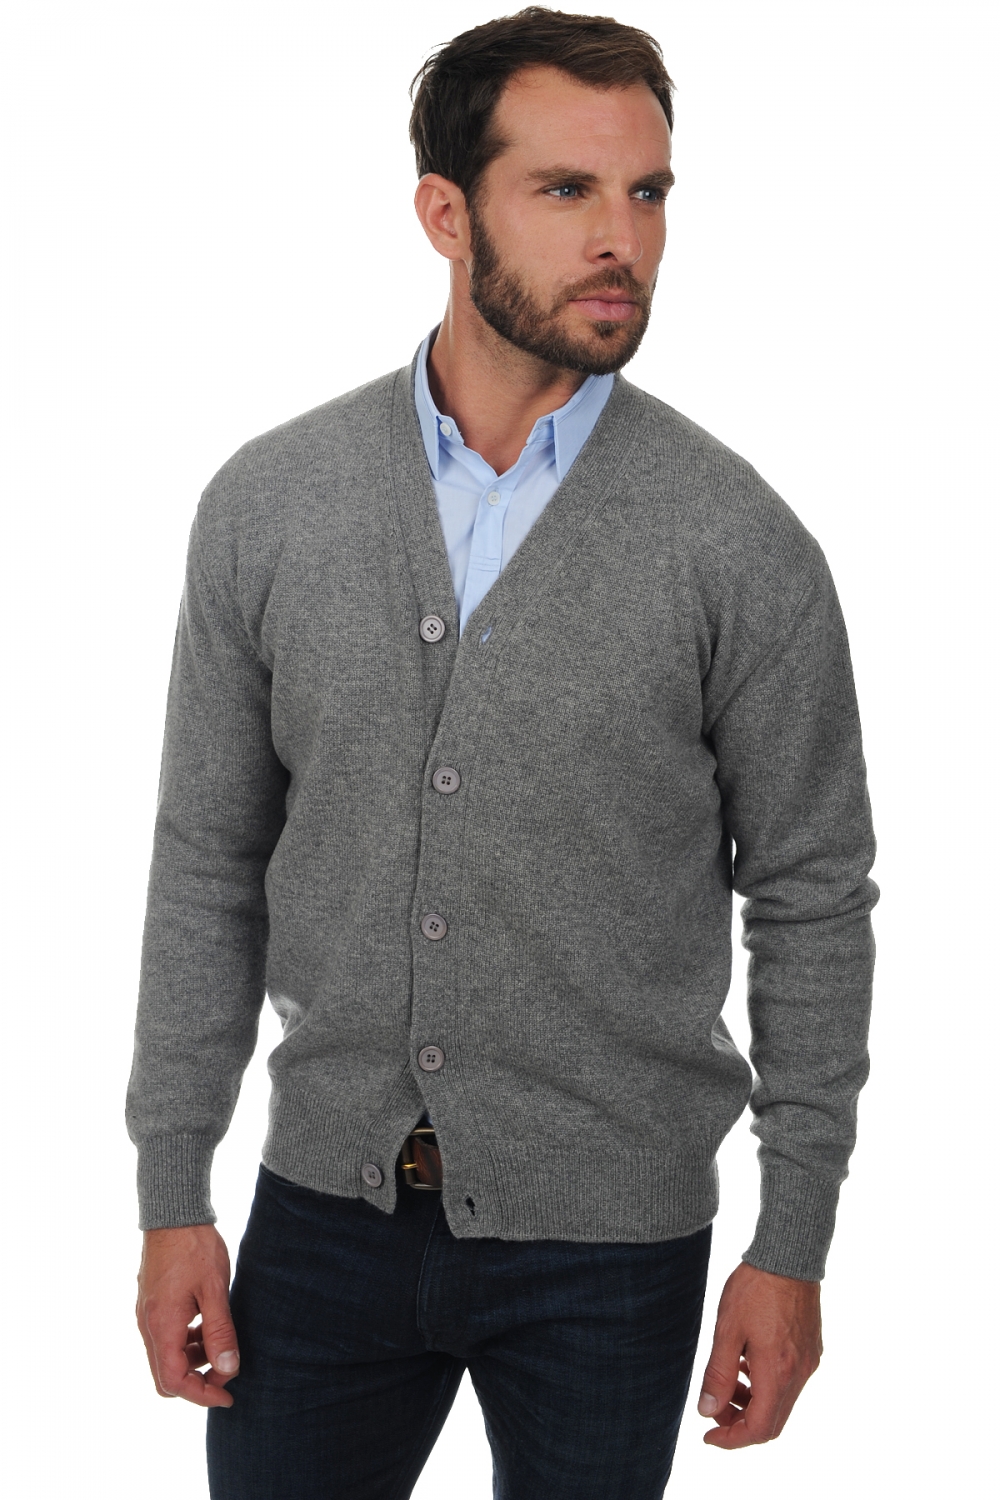 Cashmere men waistcoat sleeveless sweaters leon grey marl 2xl